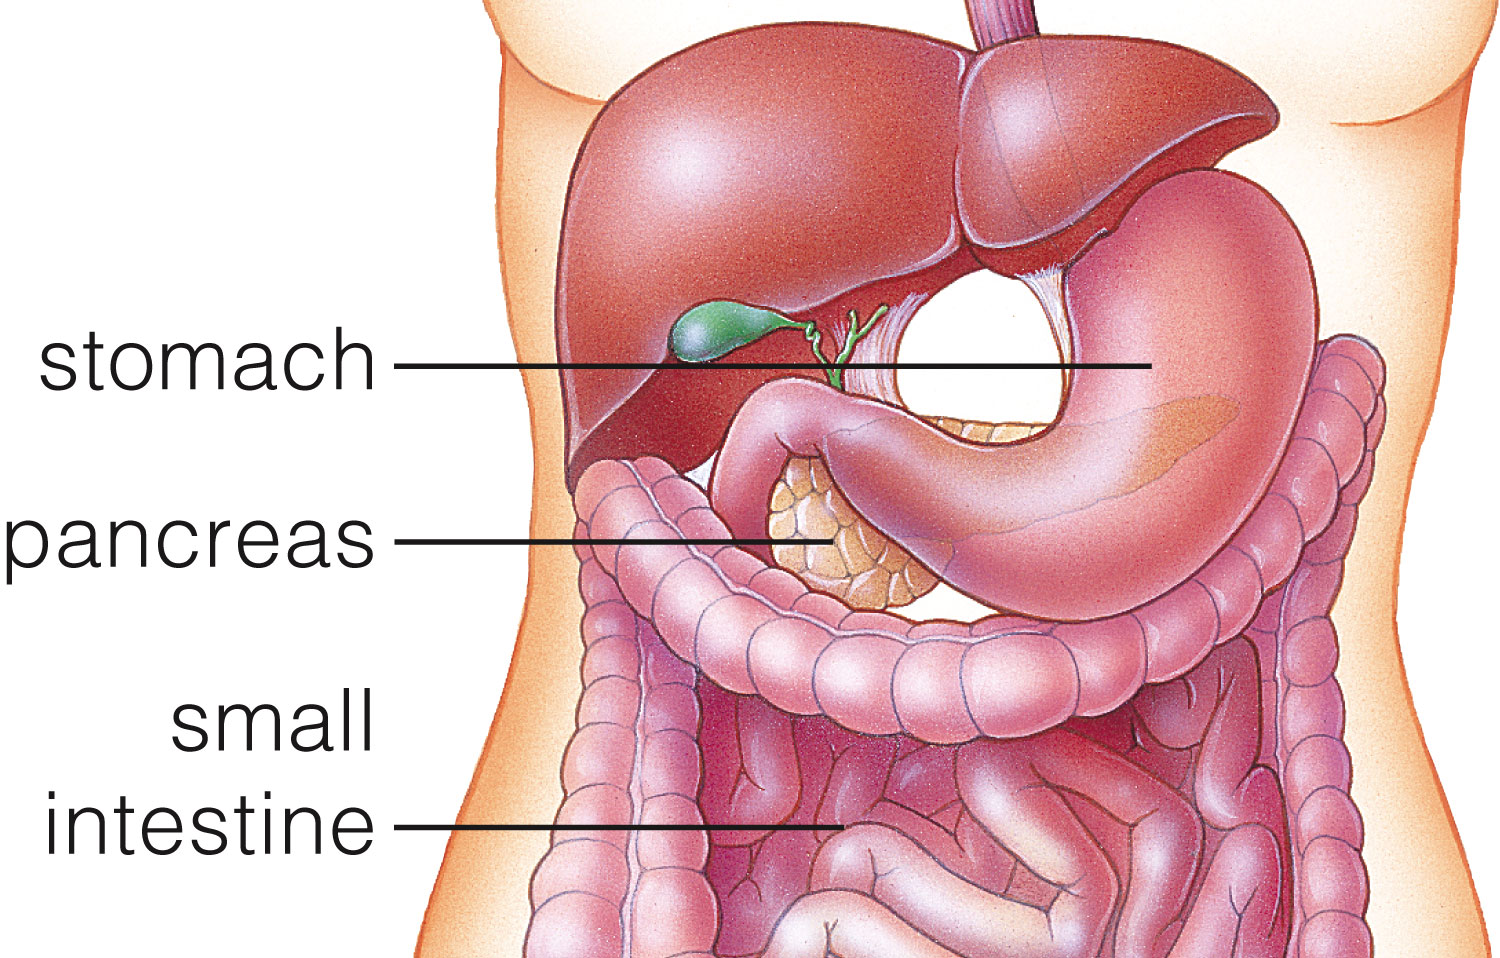 Location of the Pancreas